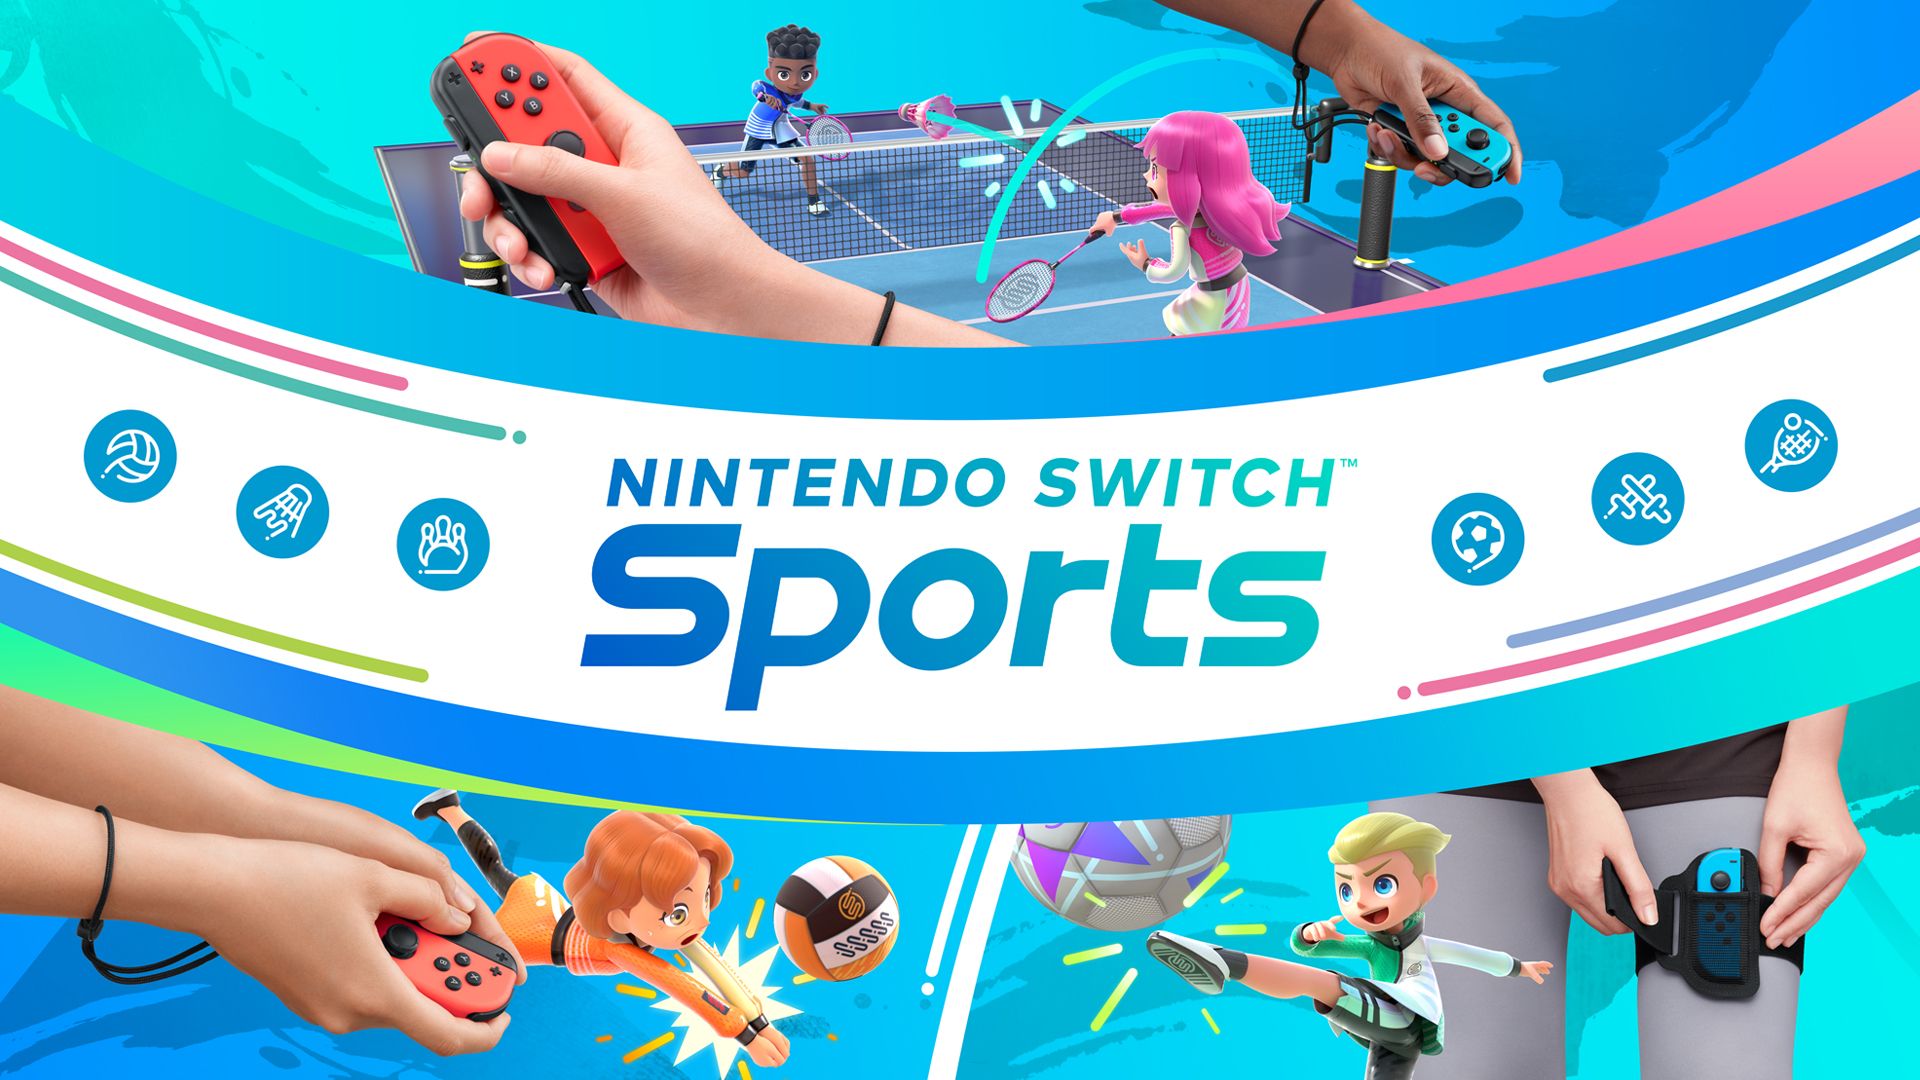 Video: Nintendo Switch Sports trailer